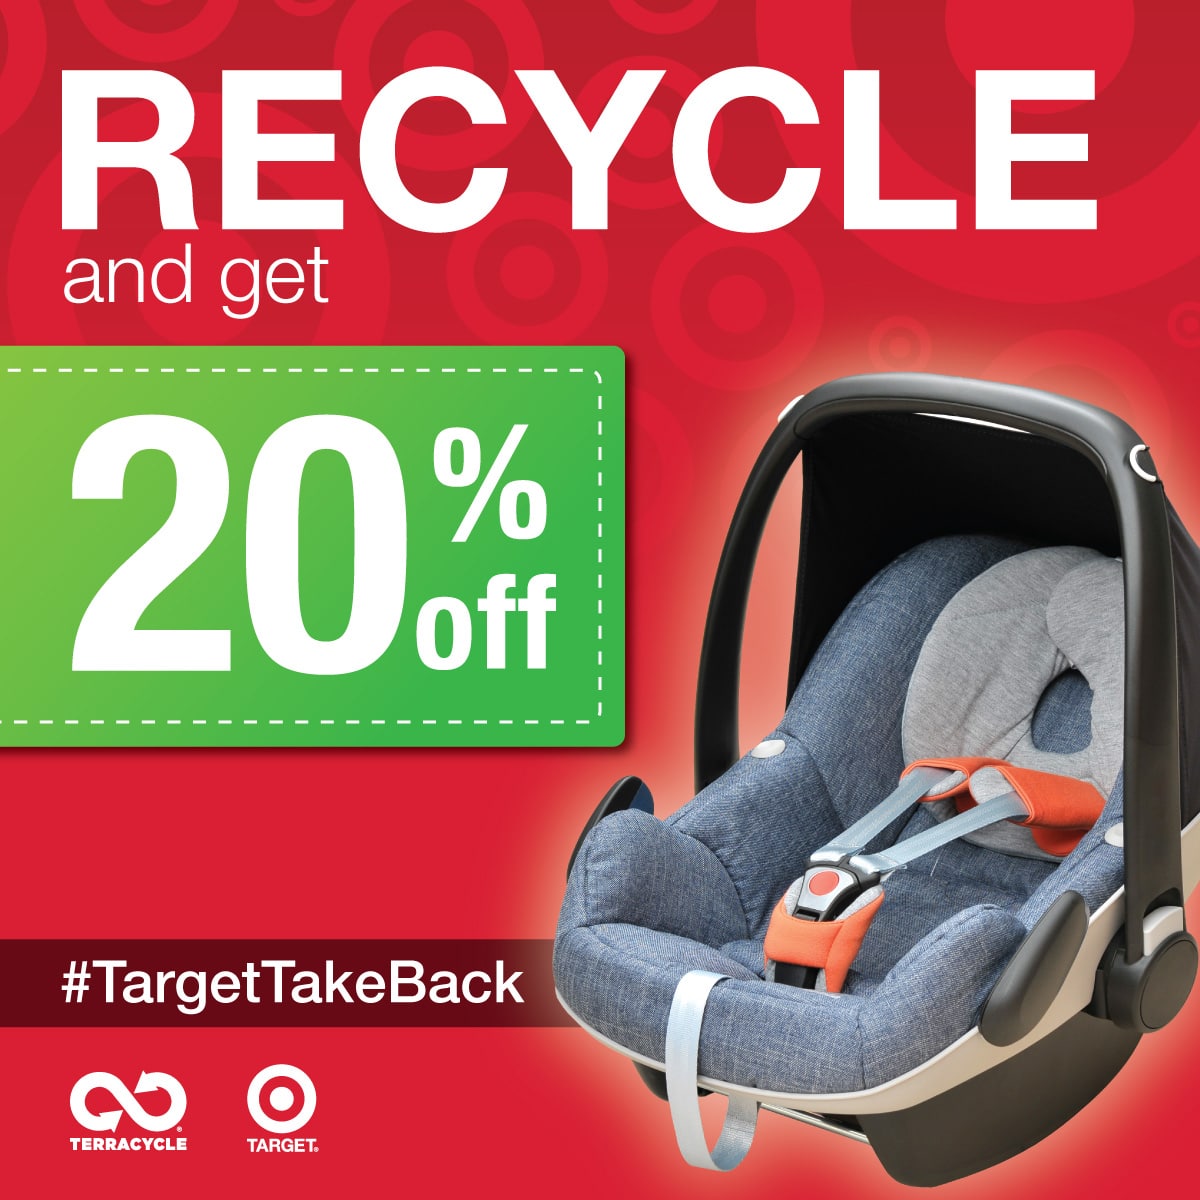 target recycle car seat 2019